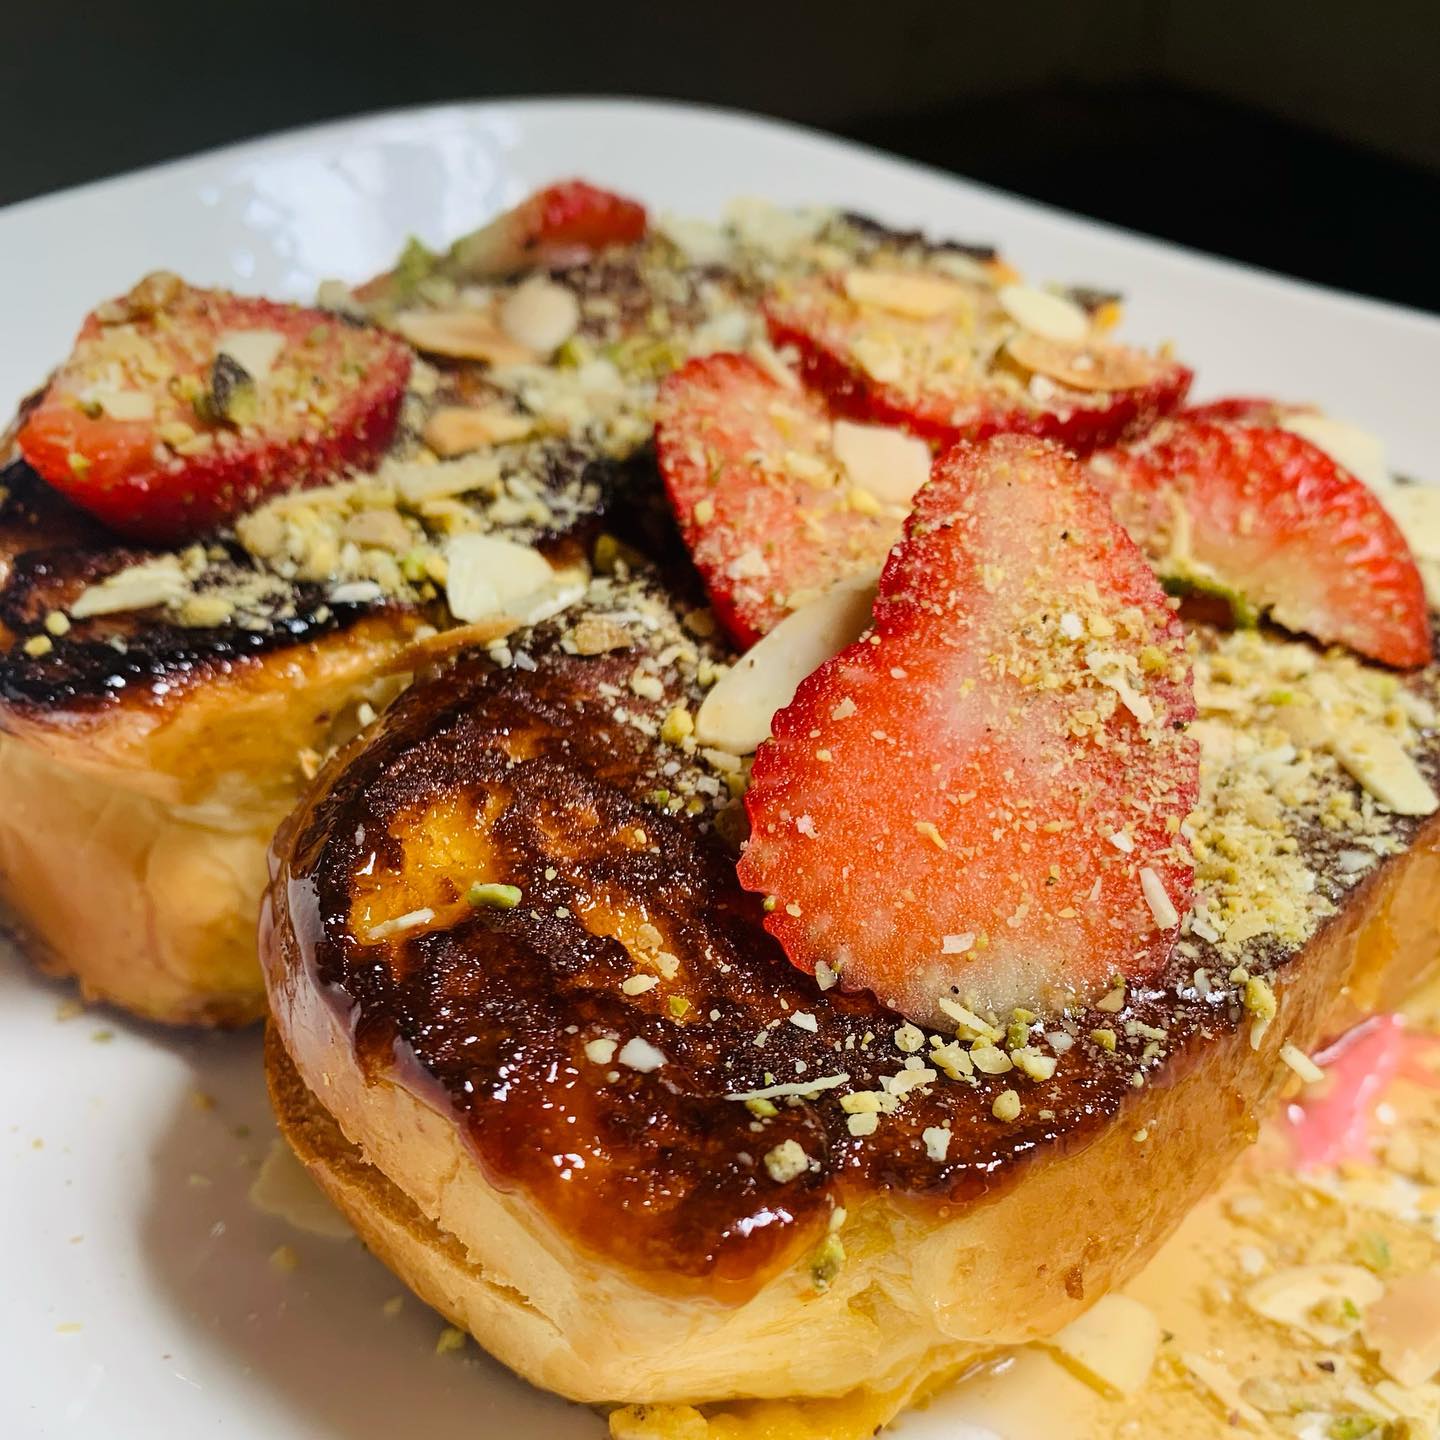 Fresh Tsoureki French Toast w/ Fresh Berries & Crushed Pistachios 😳
.
.
.
.
.
#KentroOakleigh #oakleigh #tsoureki #frenchtoast #food #foodporn #foodie #foodblogger #foodphotography #foodpics